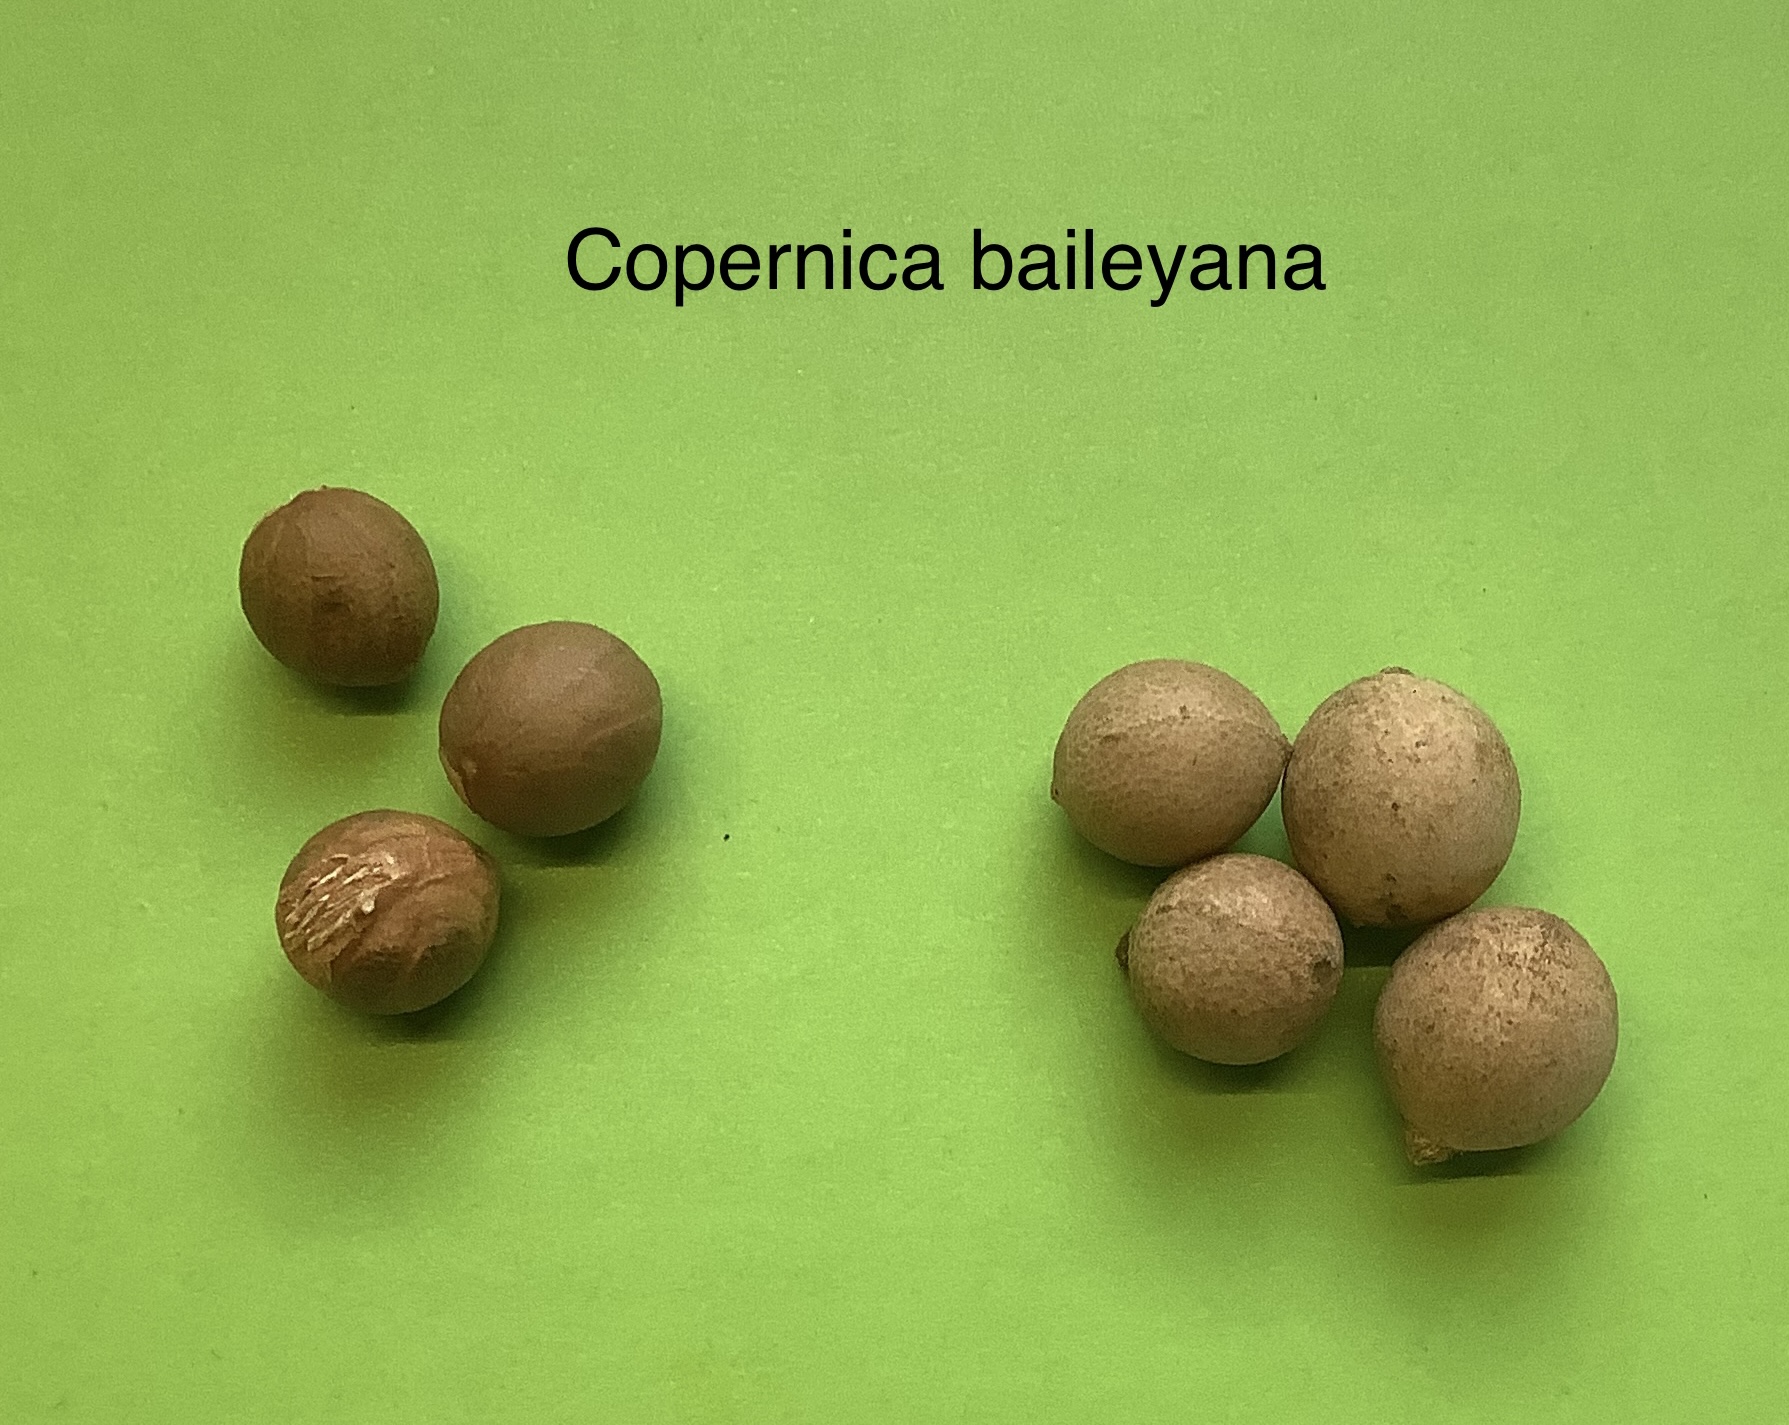 88 Copernicia baileyana